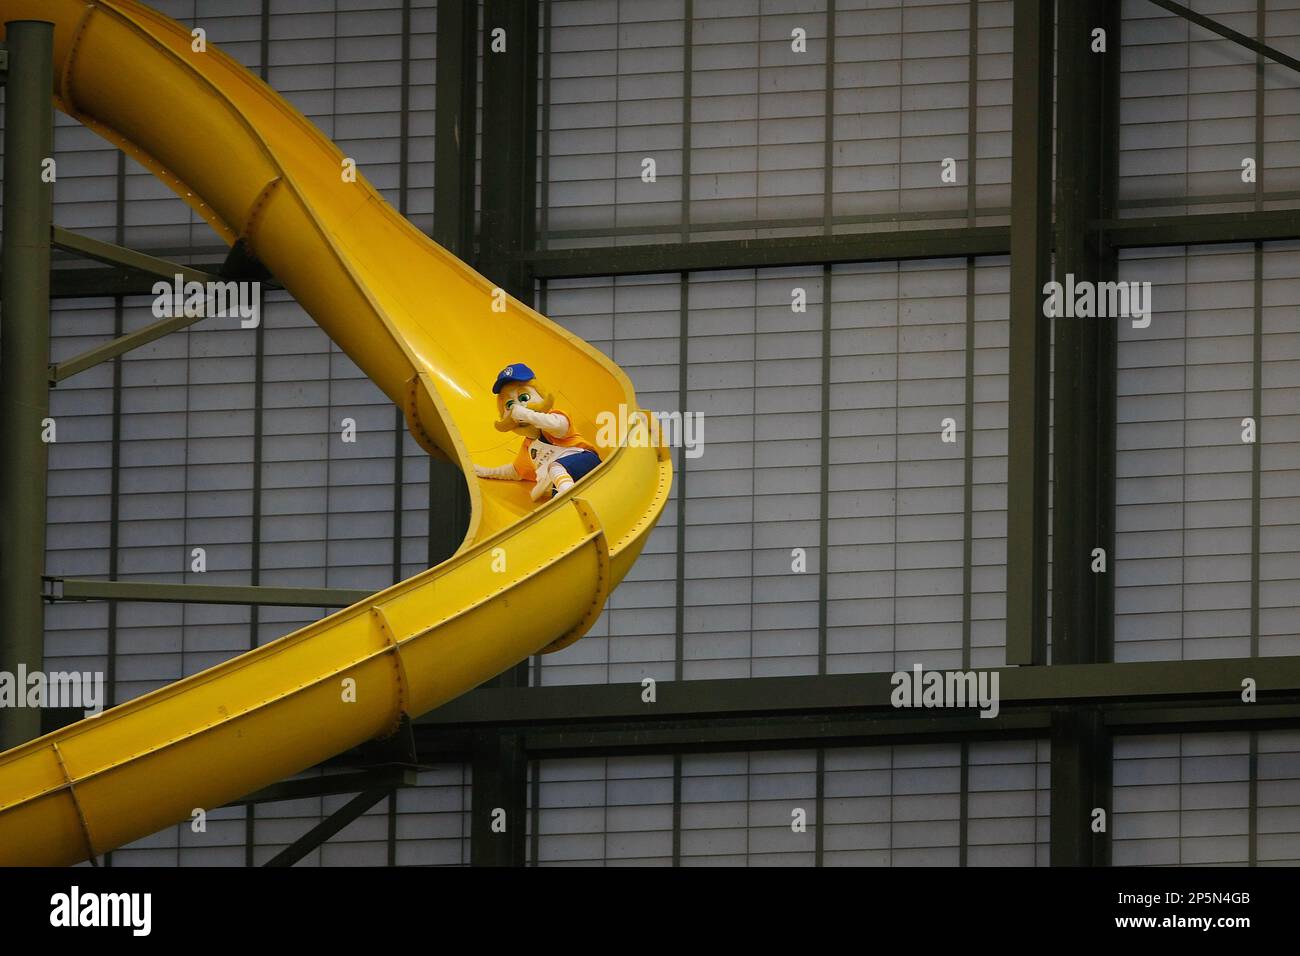 Milwaukee Brewers mascot Bernie Brewer's slide is seen before a